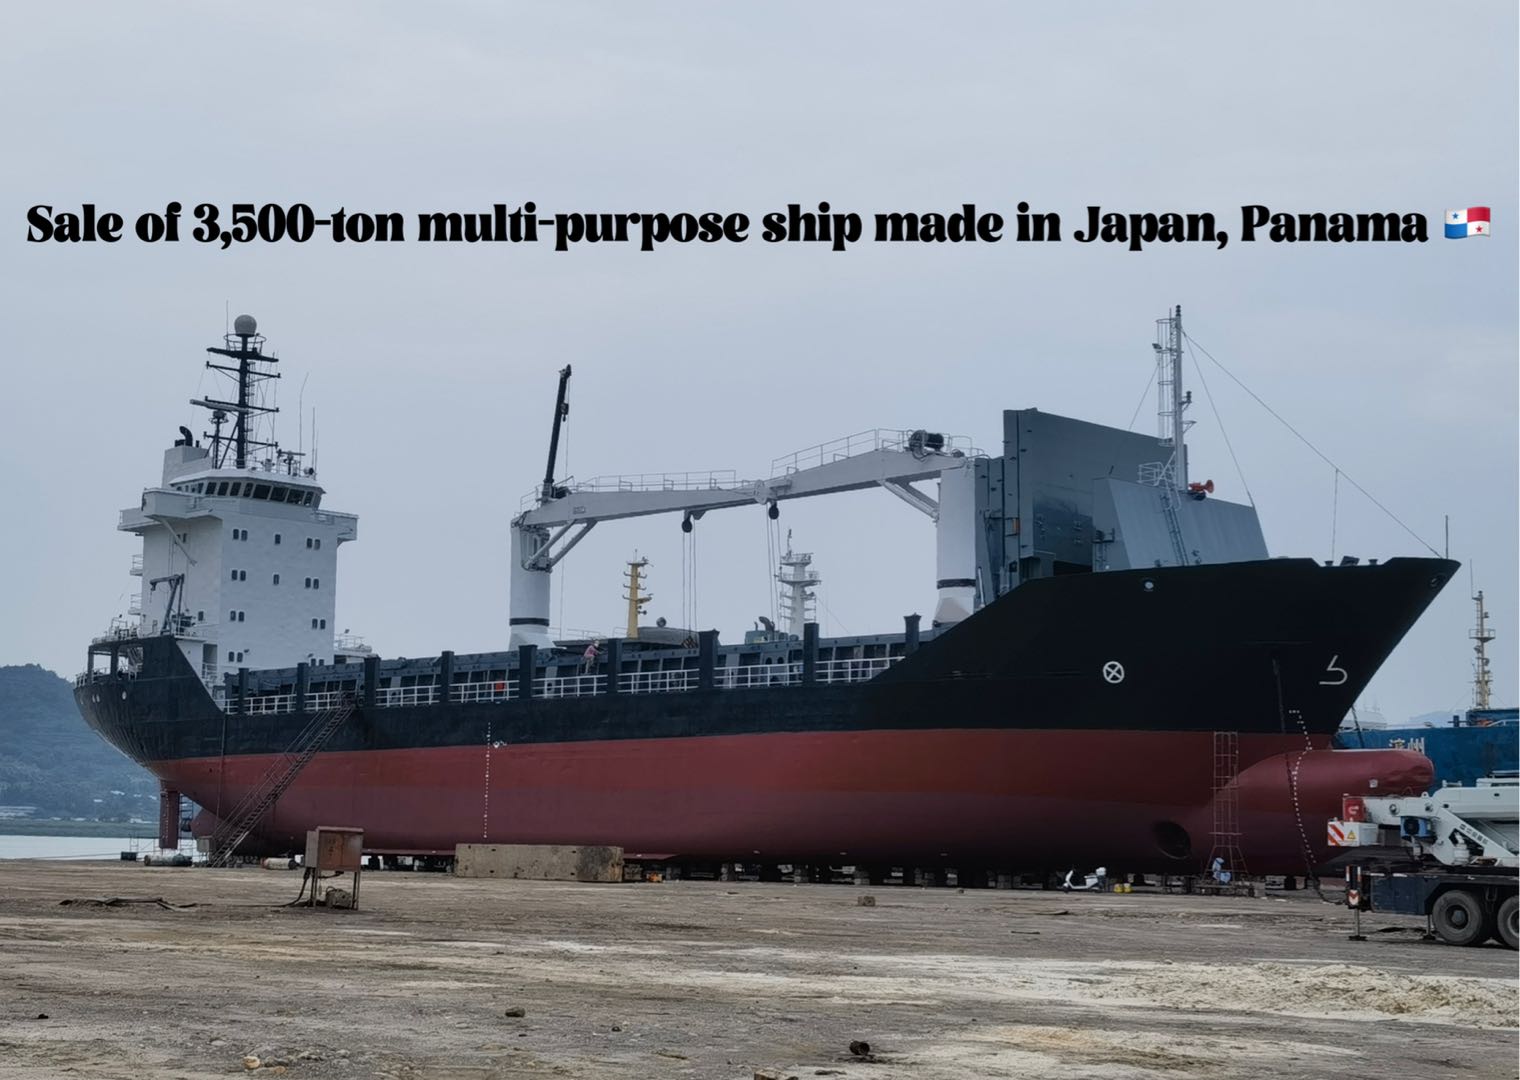 For sale: 3,500 tons of Japanese multi-purpose ship Panamanian ship